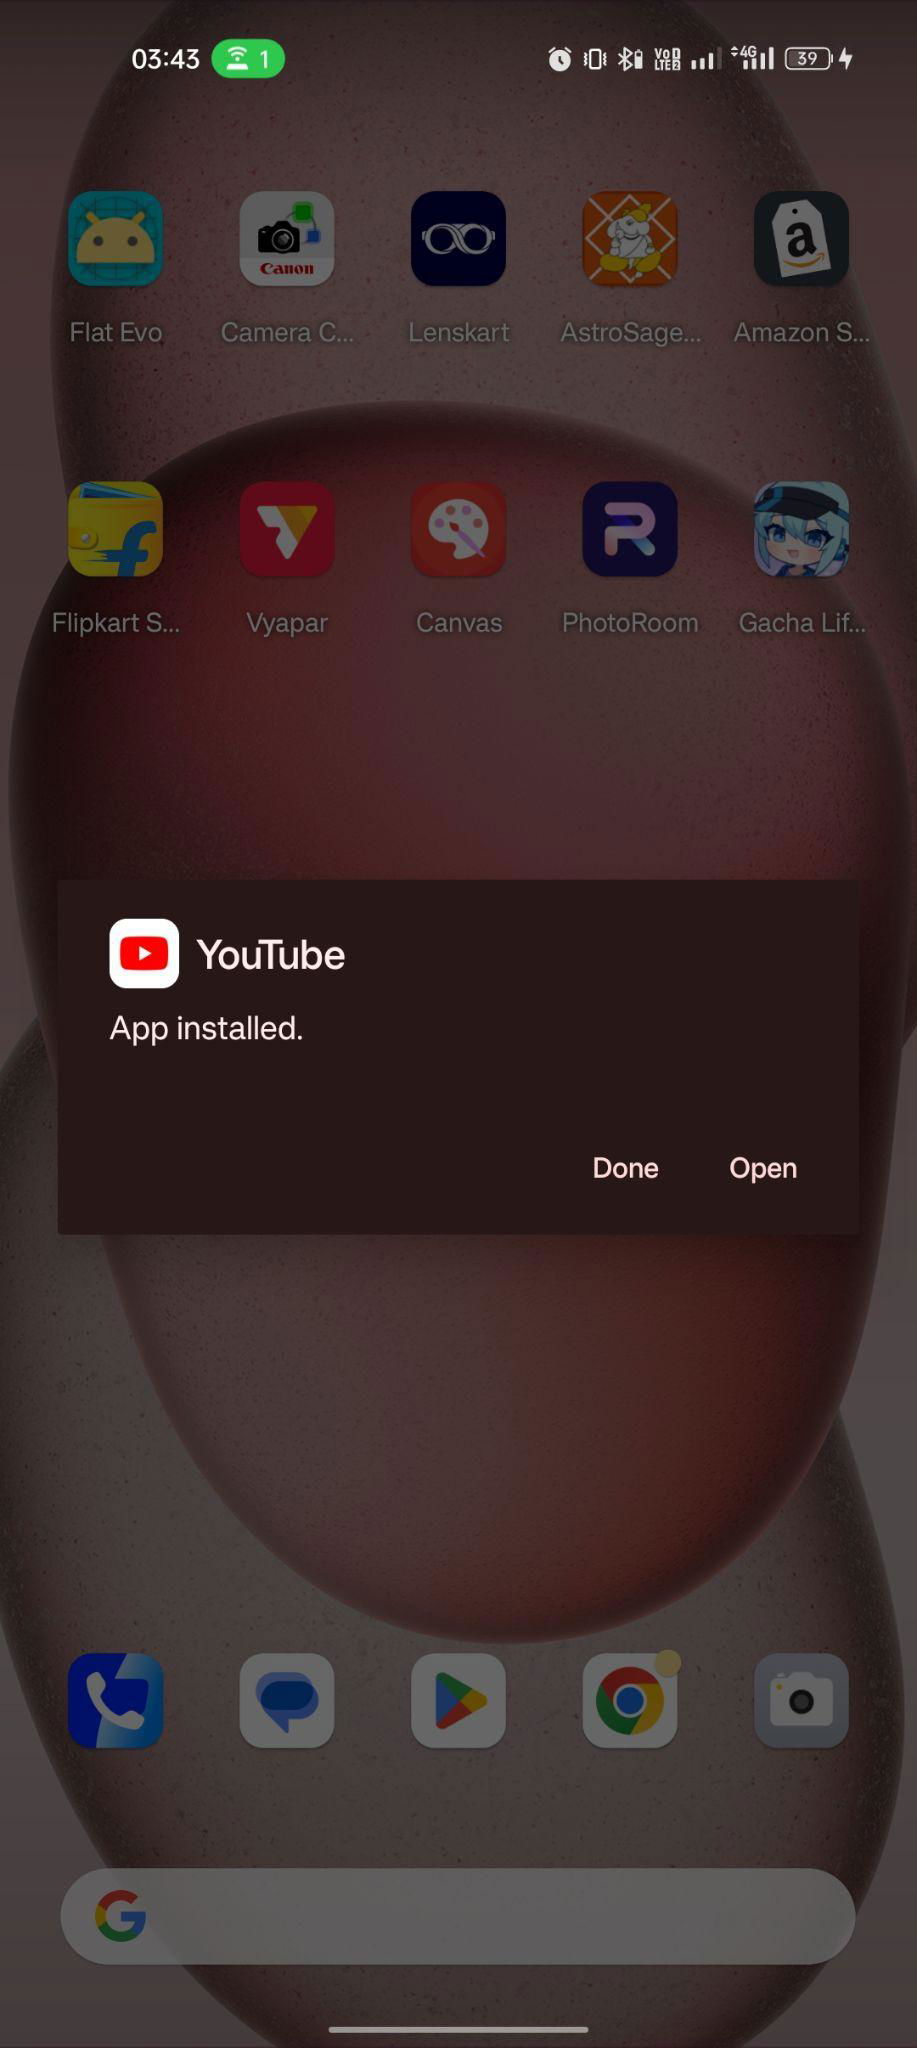 YouTube apk installed